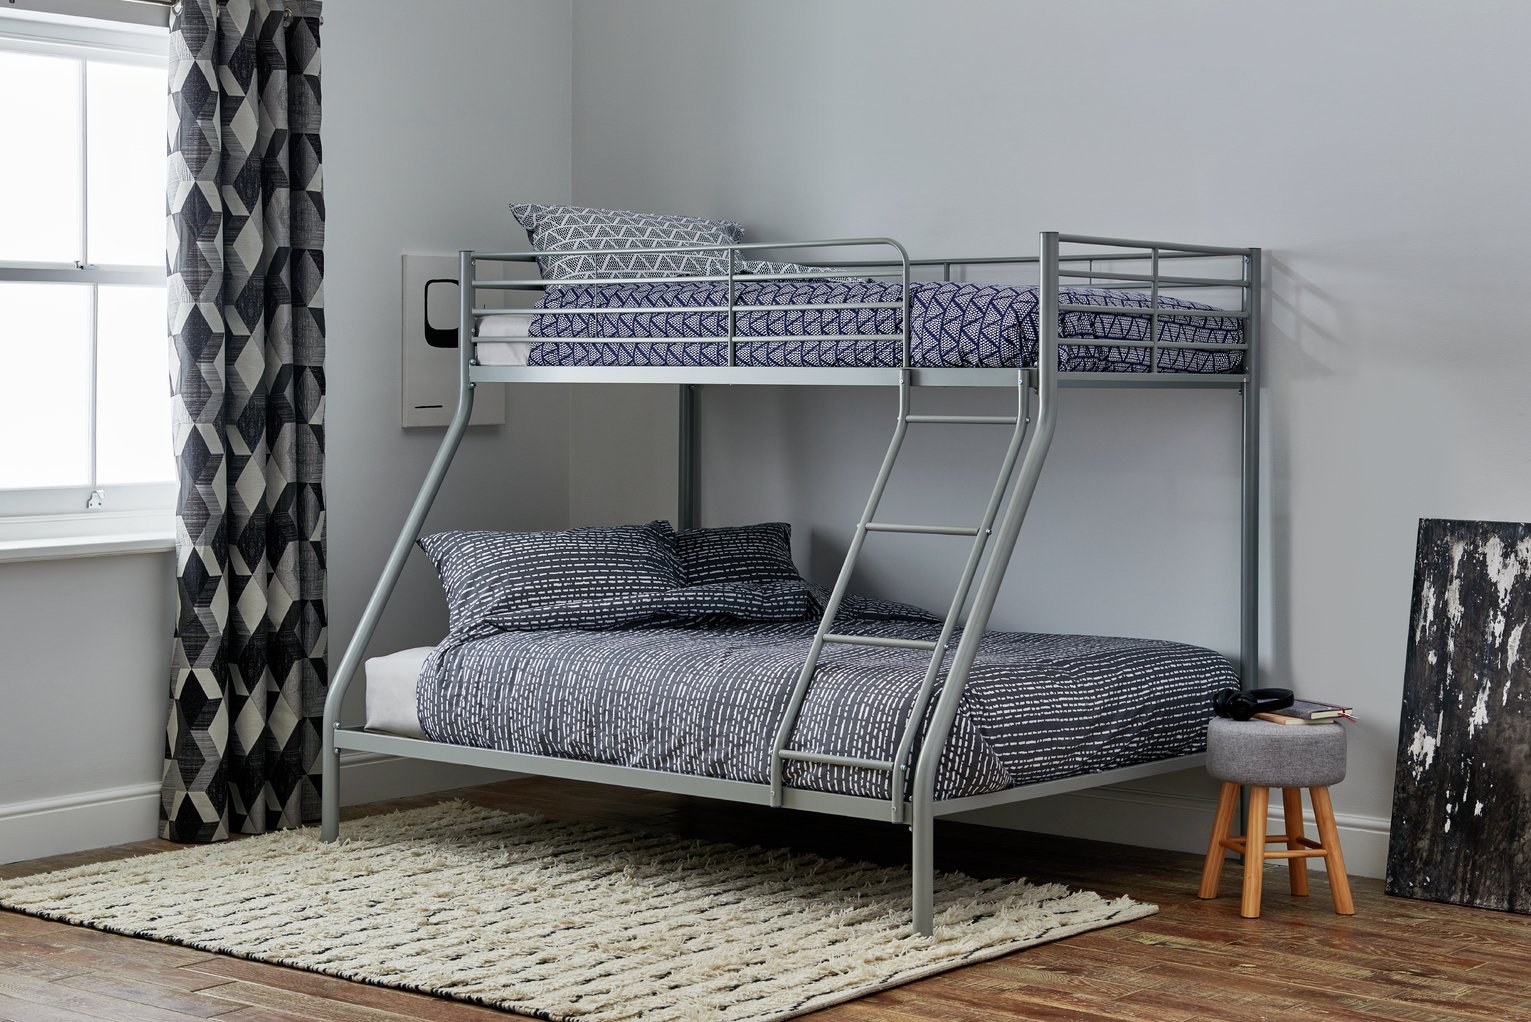 Argos Home Willen Triple Bunk Bed &2 Kids Mattresses -Silver Review